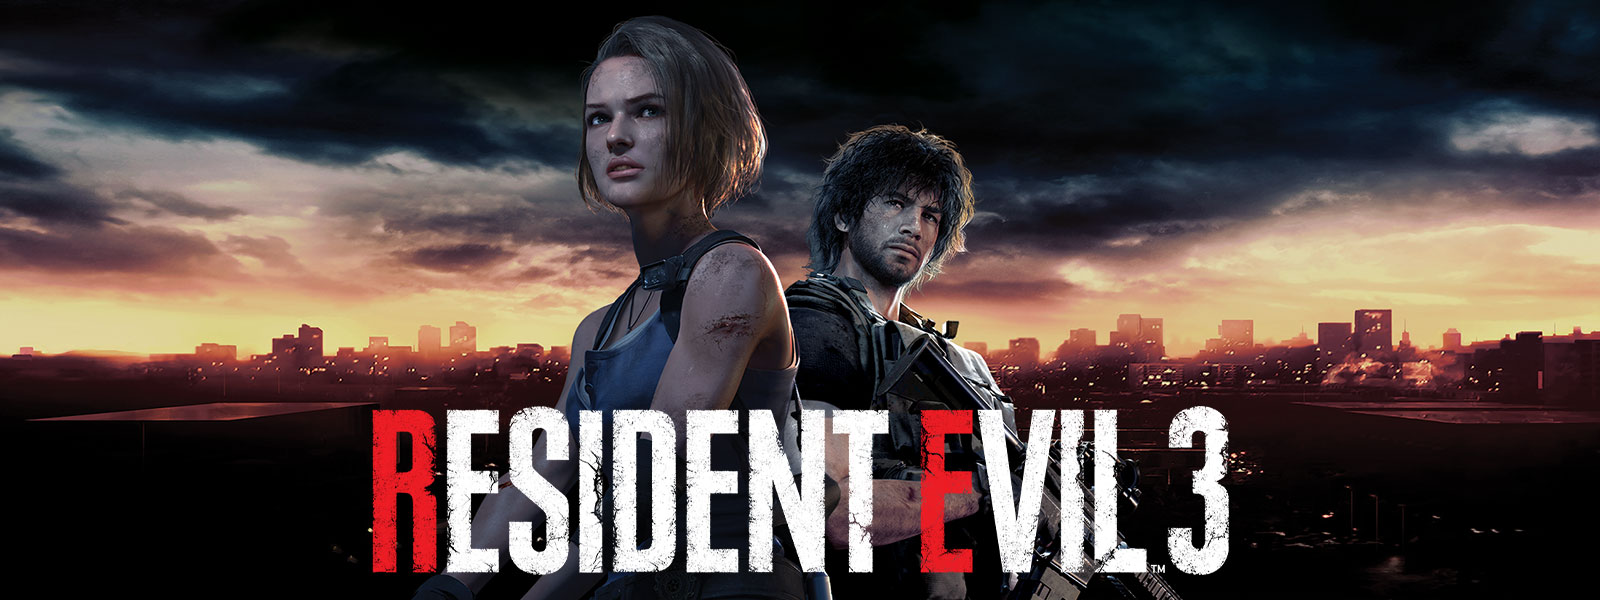 Resident Evil 3，Jill Valentine 和 Carlos Oliveira 站在一起，他倆身後是拉昆市的天際線